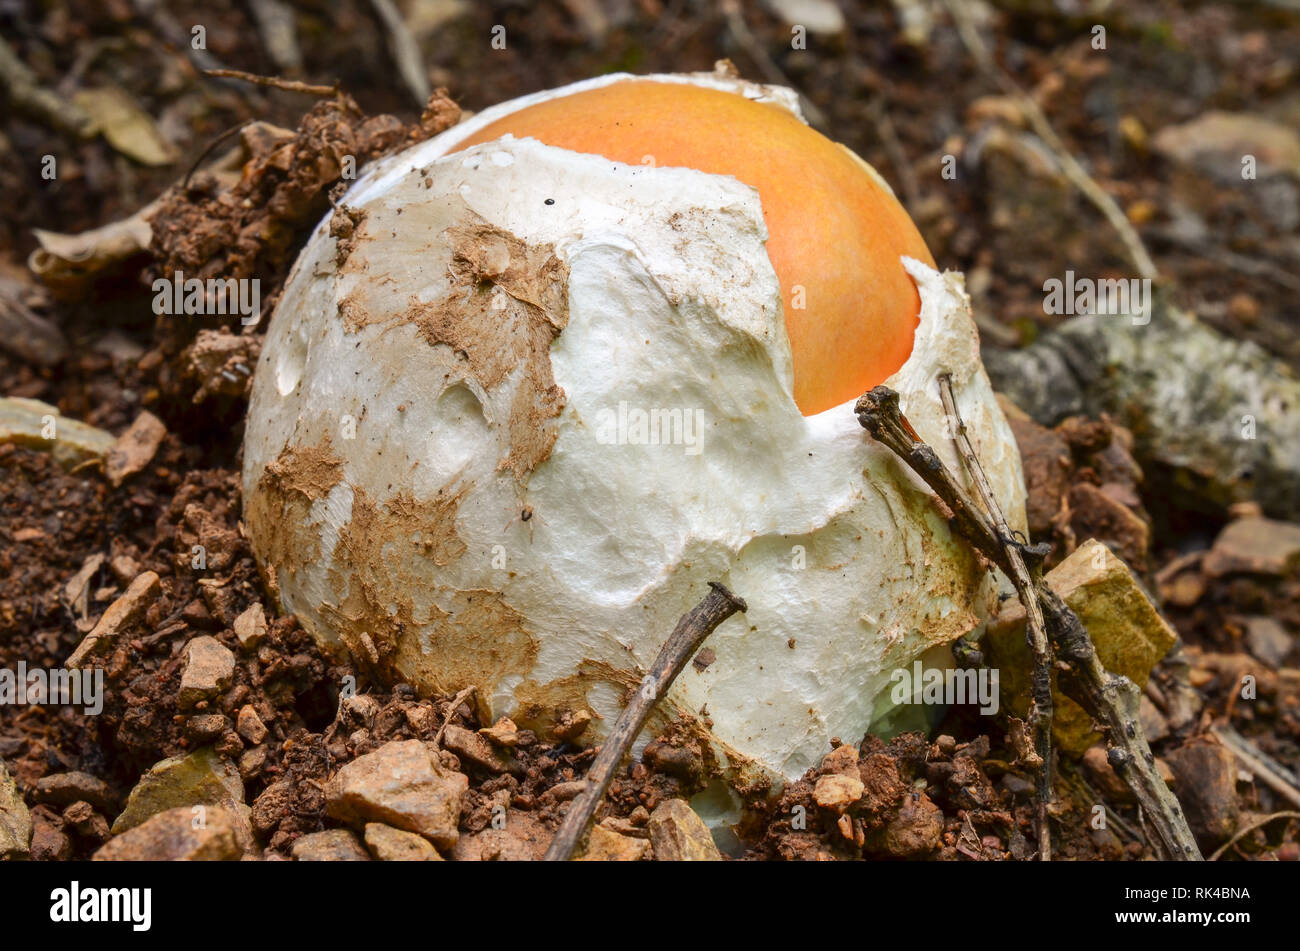 Very young, still egg-shaped, edible, delicious and nutritive  Amanita caesarea or Caesar's mushroom in natural habitat Stock Photo